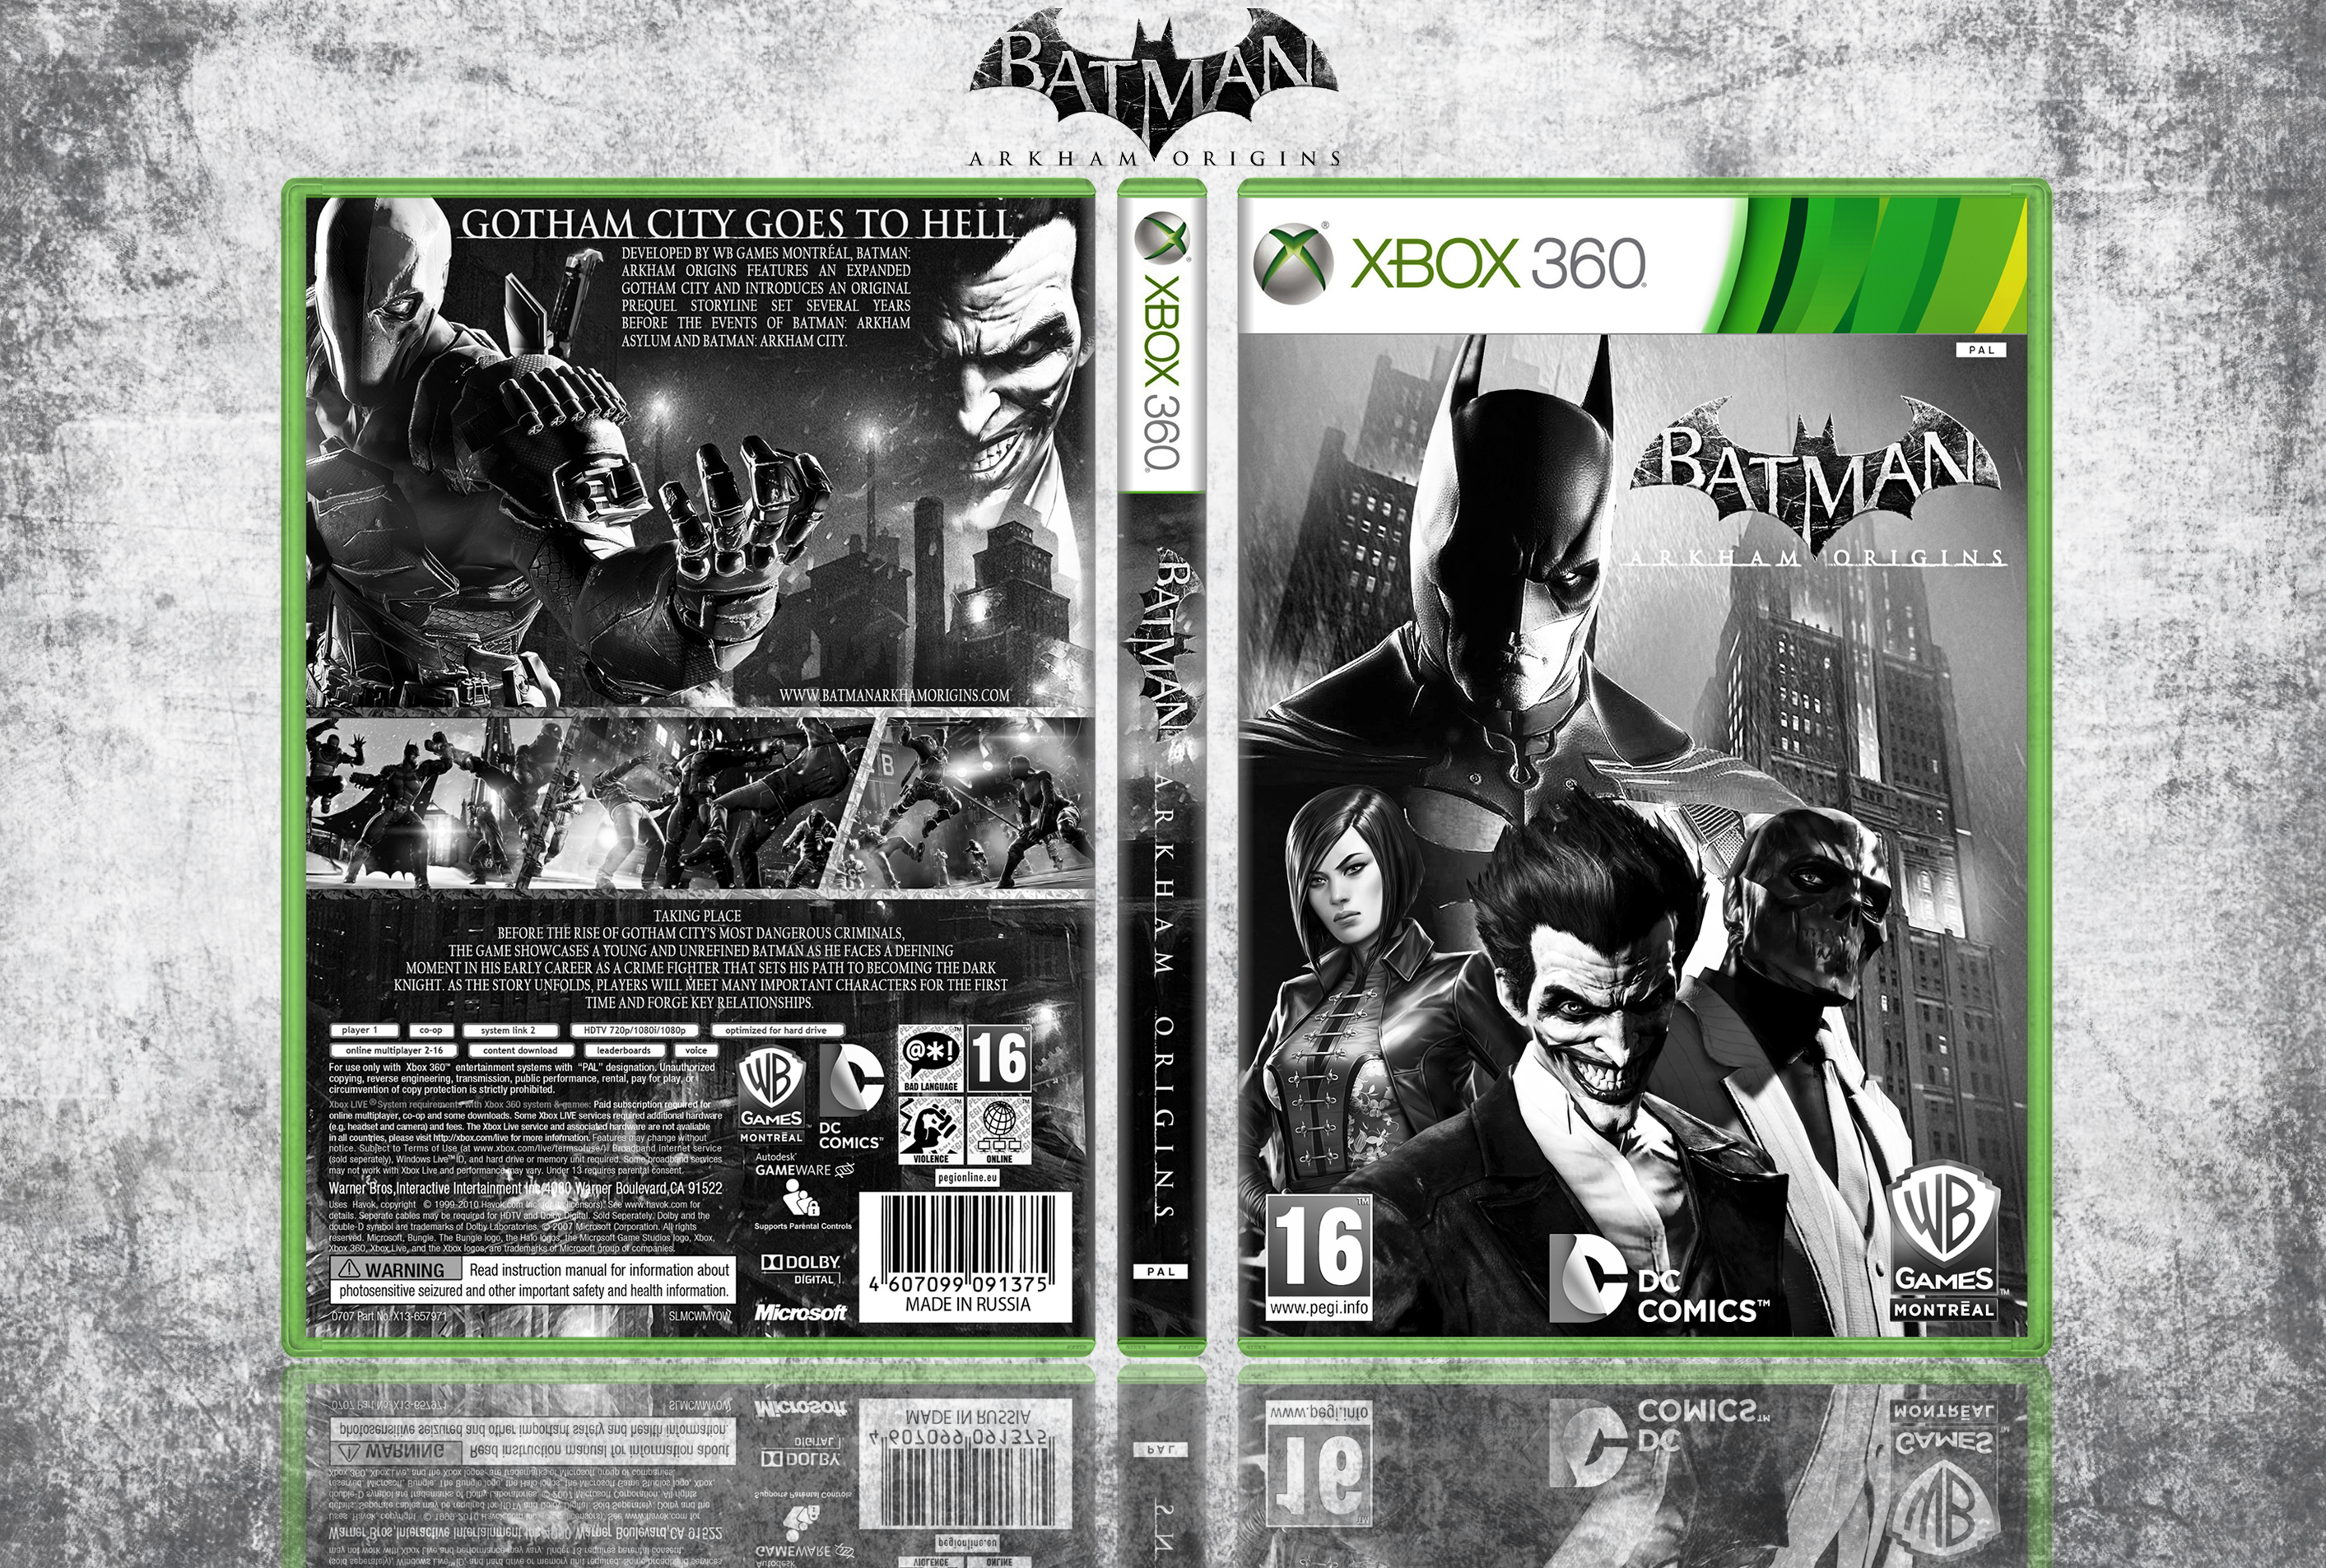 The Batman: Arkham Origins box cover